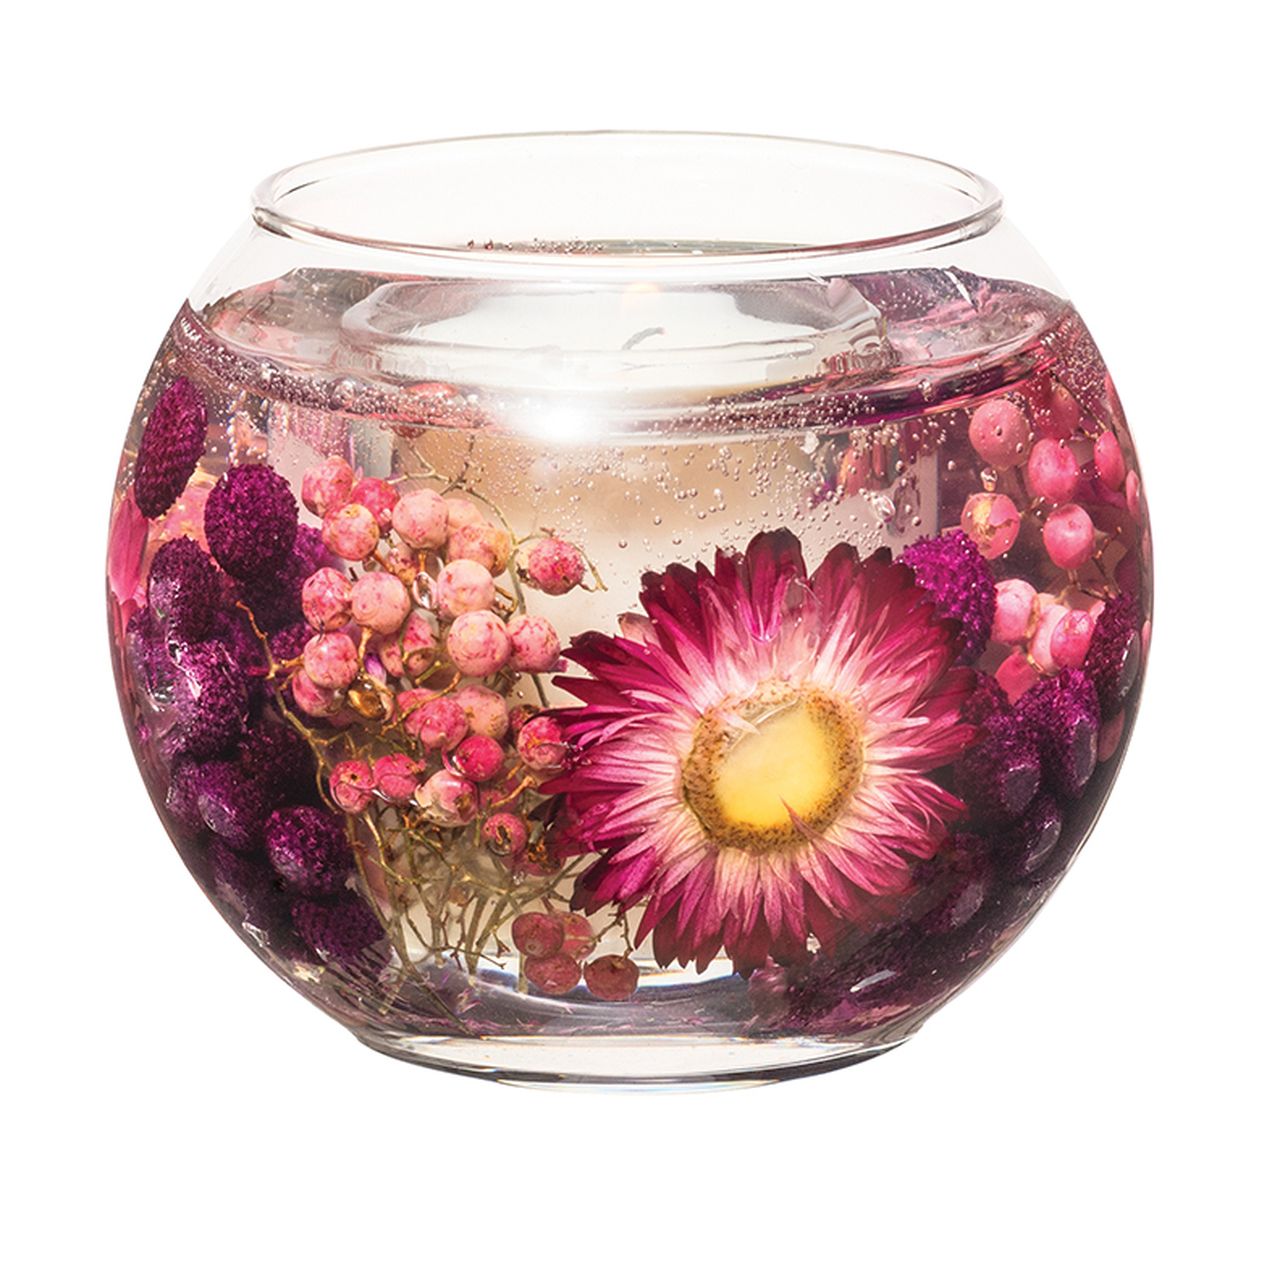 Blackberry Bay Stoneglow Botanics Natural Wax Fishbowl Refillable Scented Jar Candle